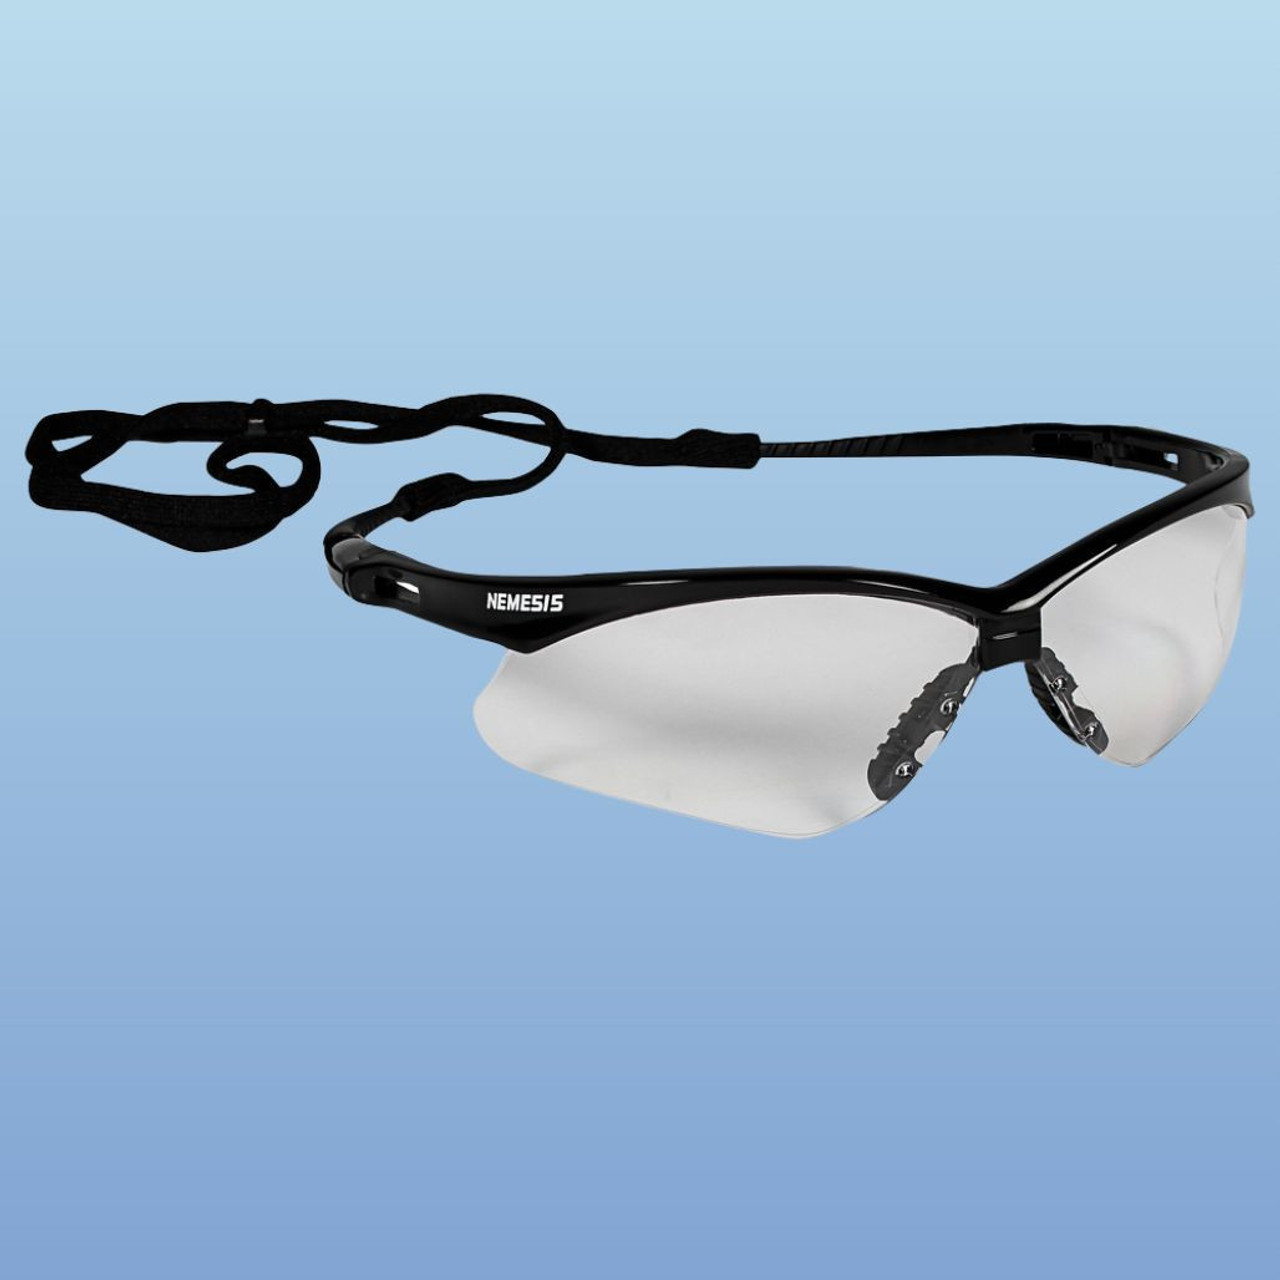 Jackson V30 Nemesis Safety Glasses Polarized Smoke Lenses